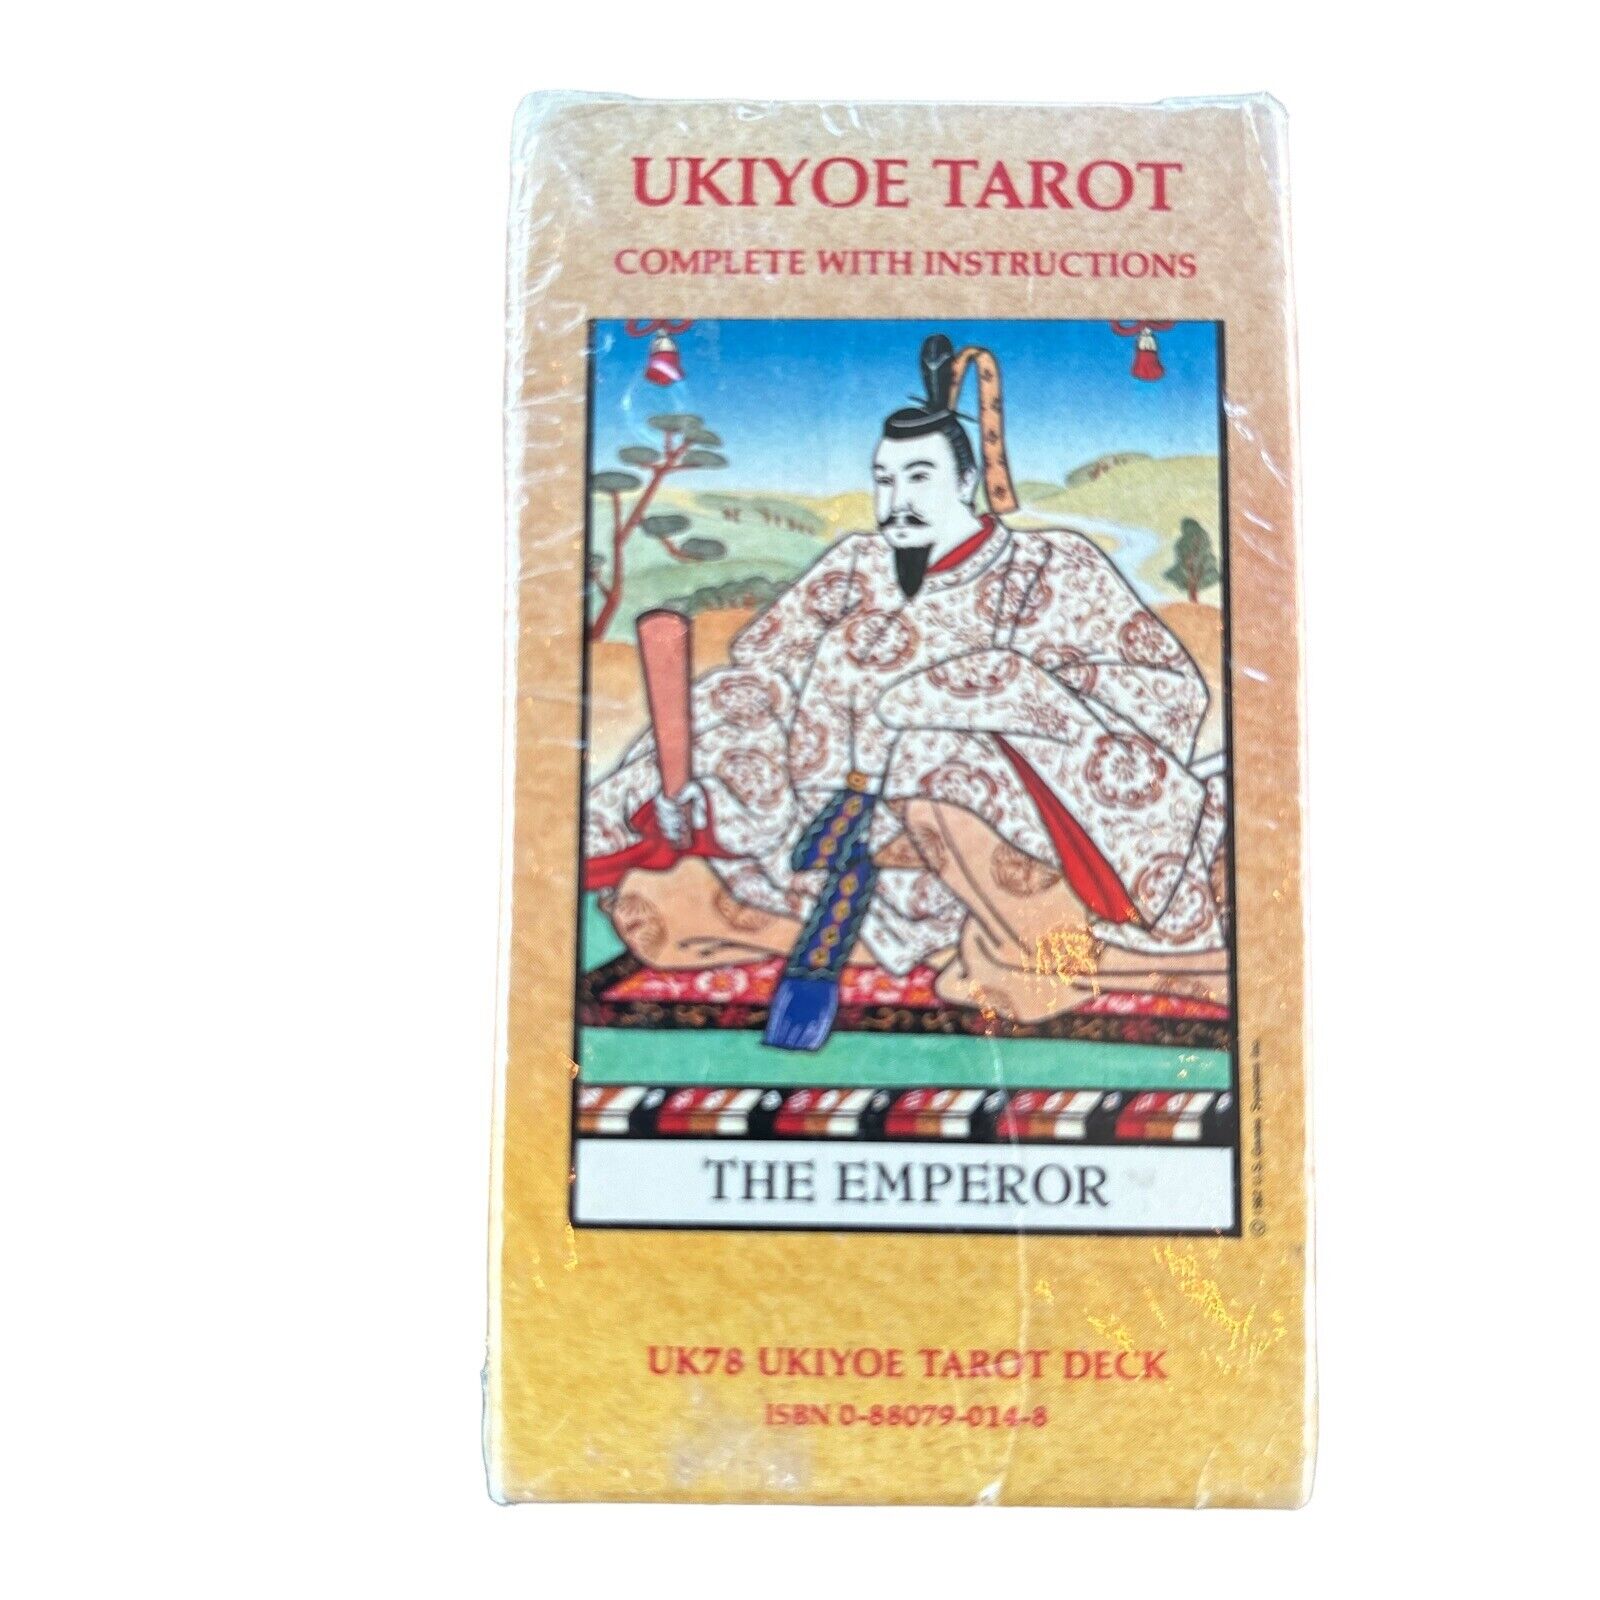 Rare Vintage 1982 UK78 Ukiyoe Tarot Deck - ISBN 0-88079-014-8 - SEALED